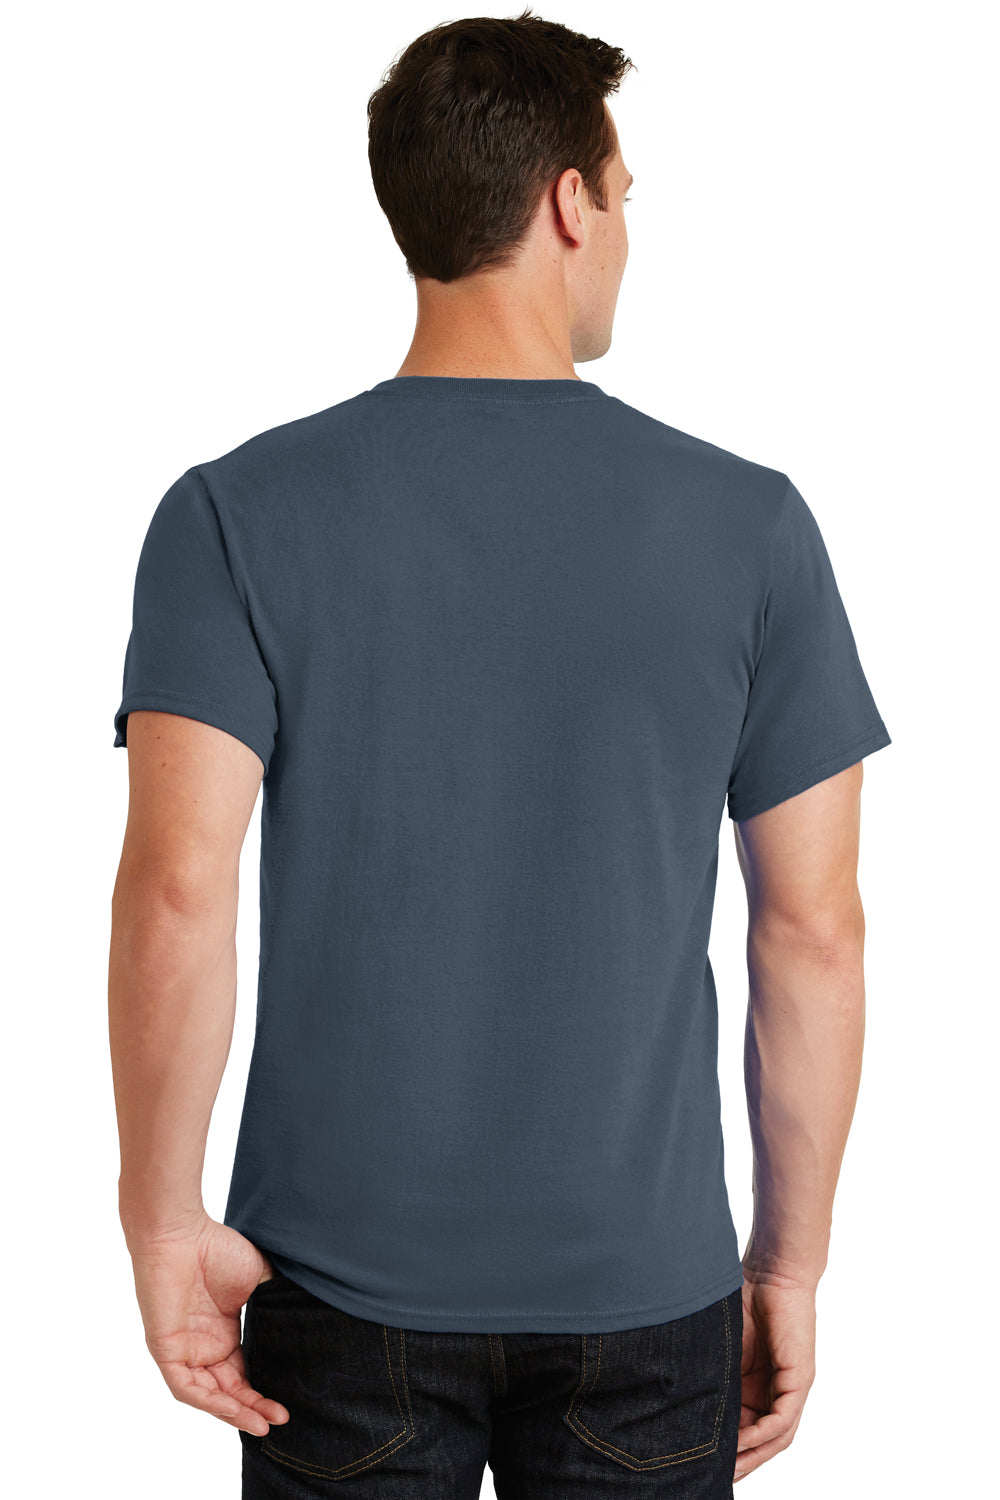 Port & Company PC61 Mens Essential Short Sleeve Crewneck T-Shirt Steel Blue Back